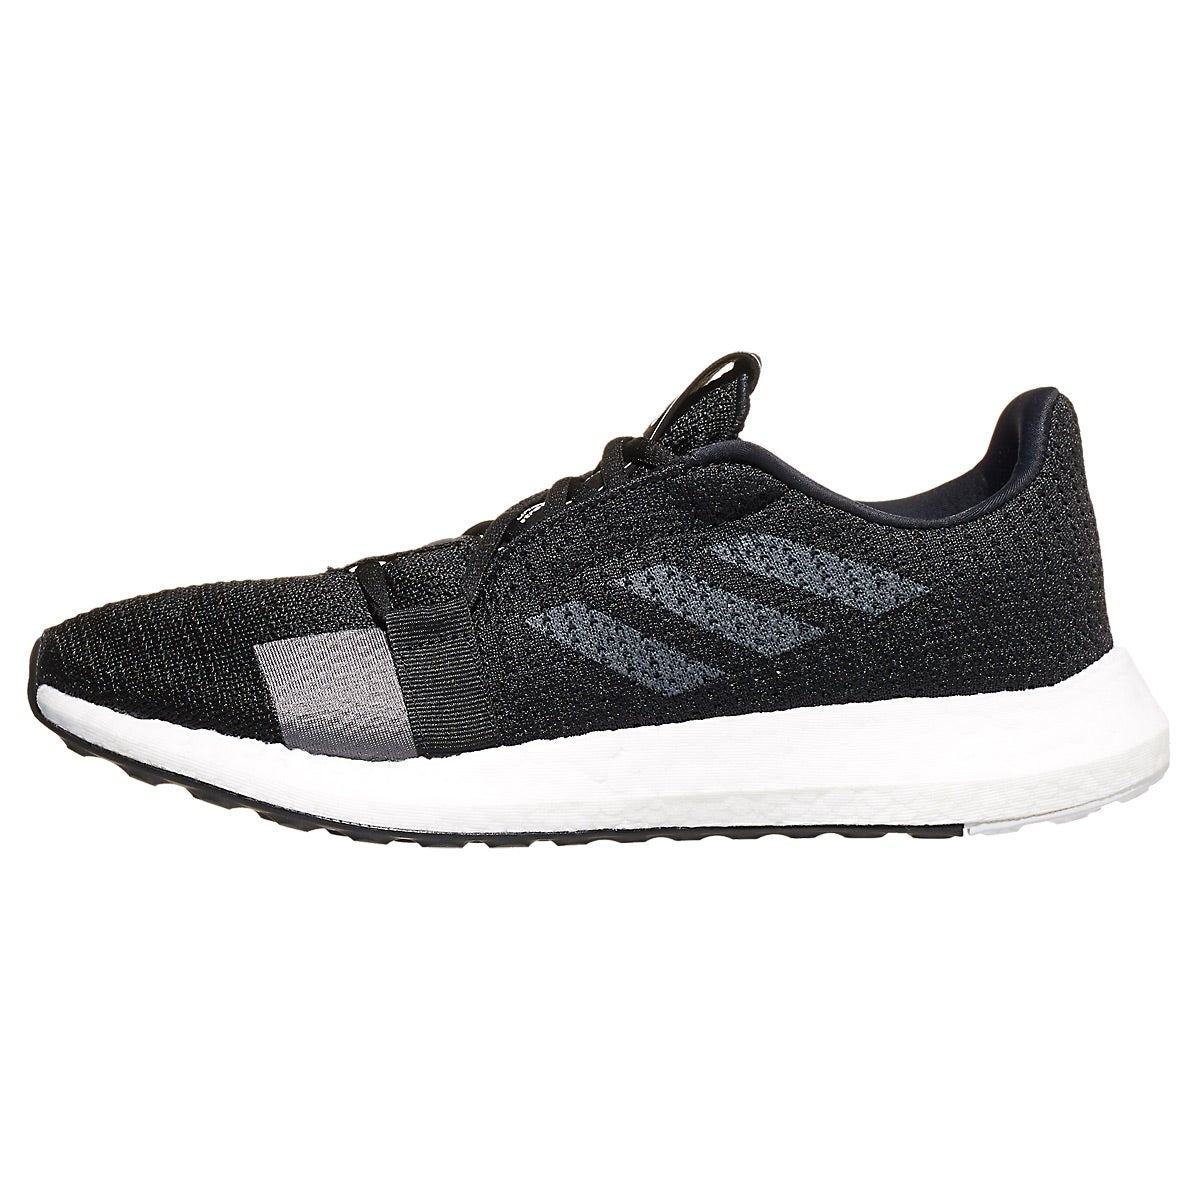 adidas SenseBOOST GO Women's Shoes Black/Grey/White 360° View | Running ...